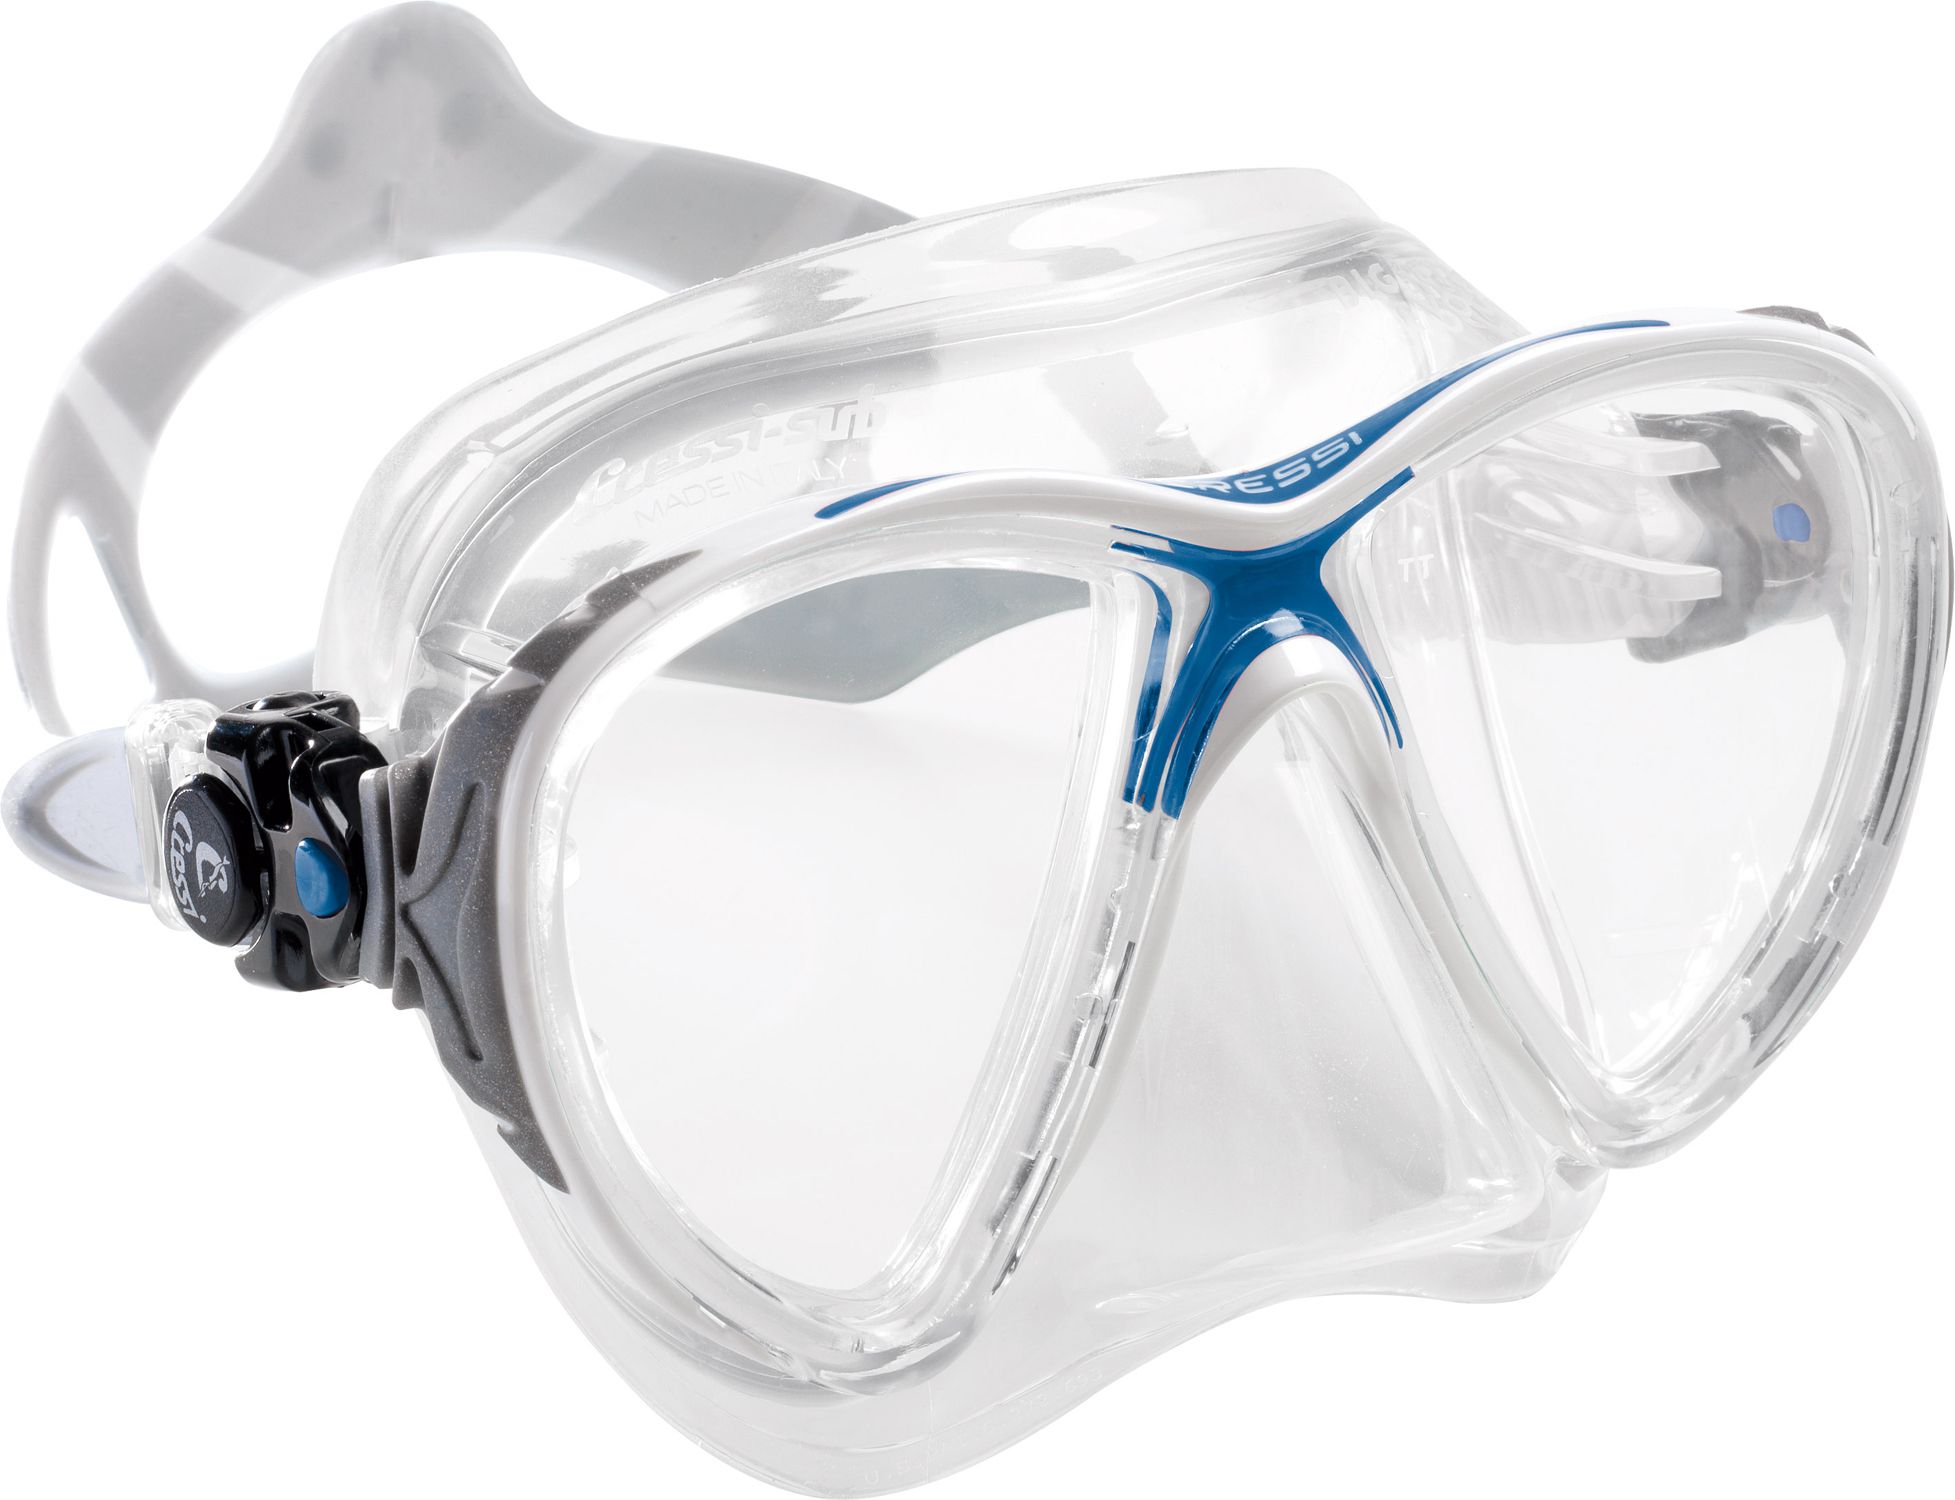 Photos - Swimming Mask Cressi Sub Cressi Big Eyes Evolution Crystal Snorkeling & Scuba Mask, White/Blue 16CR 